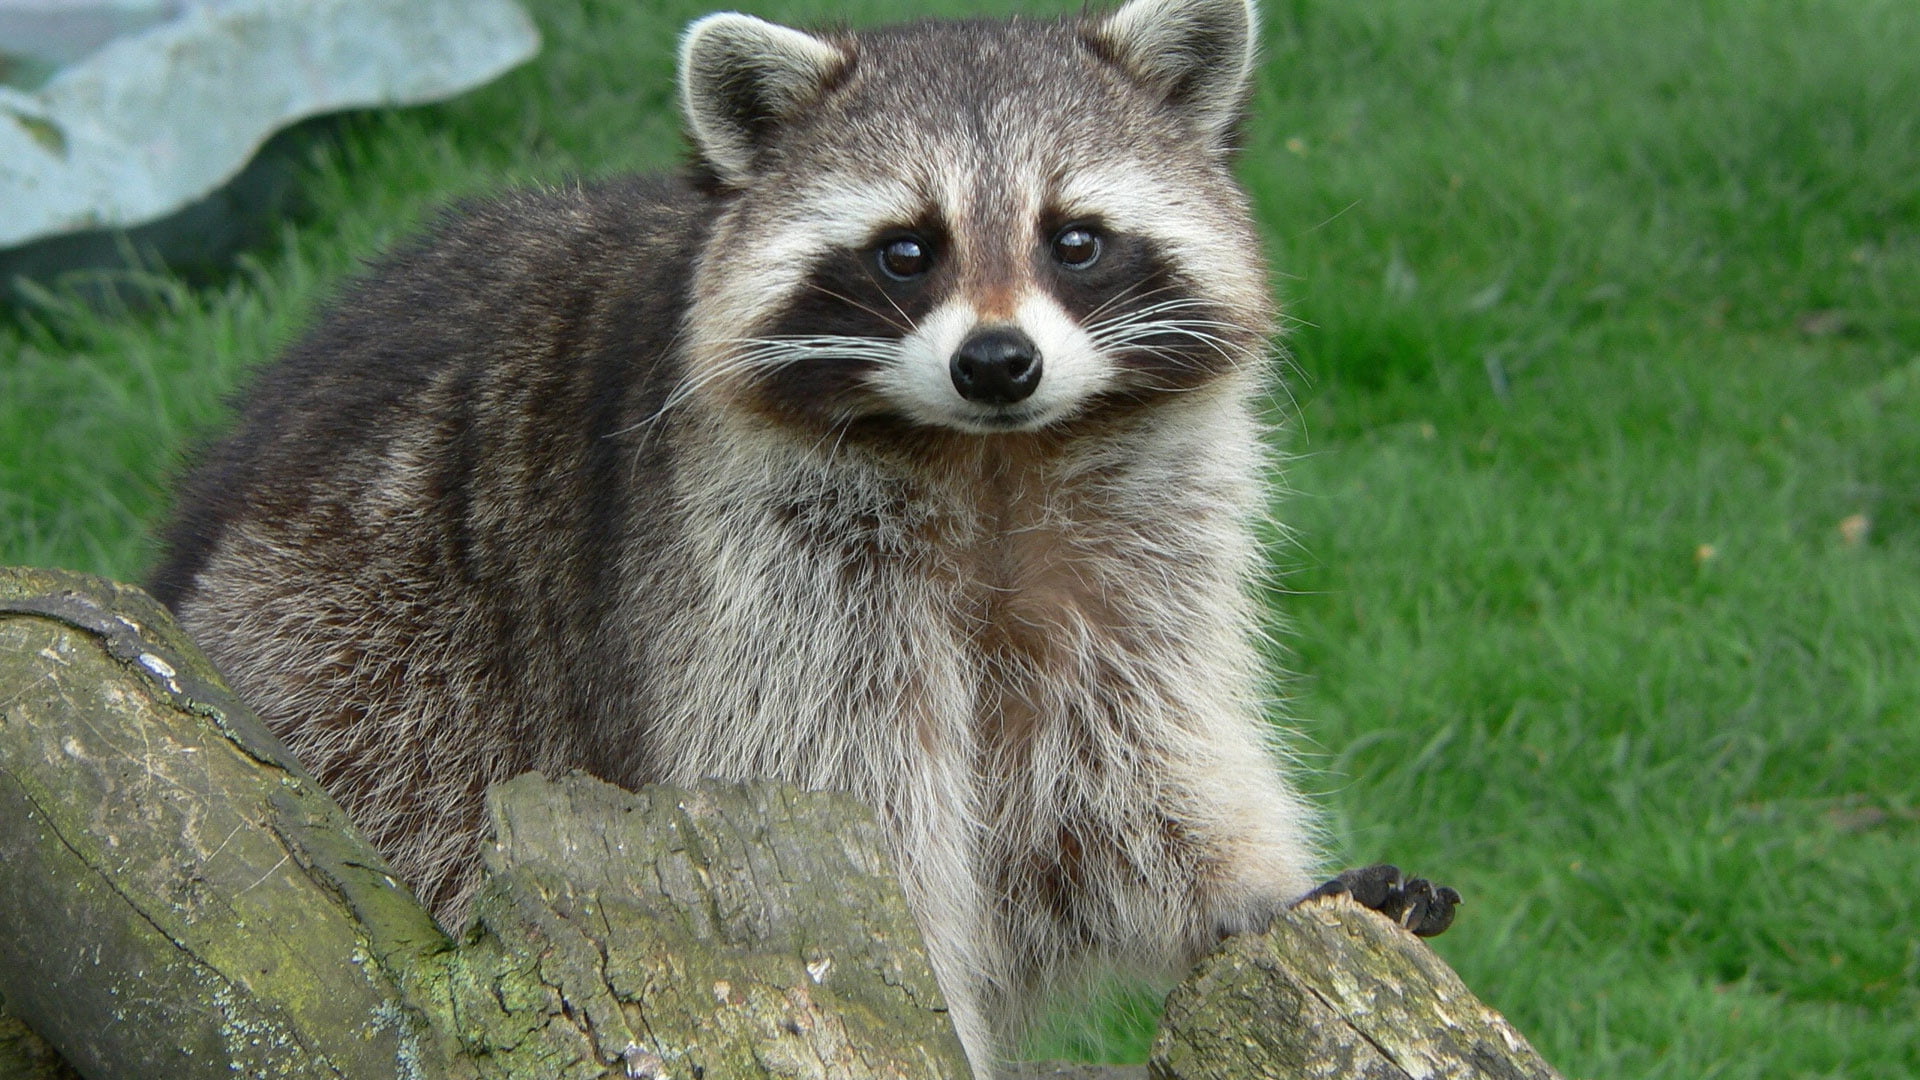 brown raccoon, grass, muzzle, wool, snag, animal, mammal, wildlife